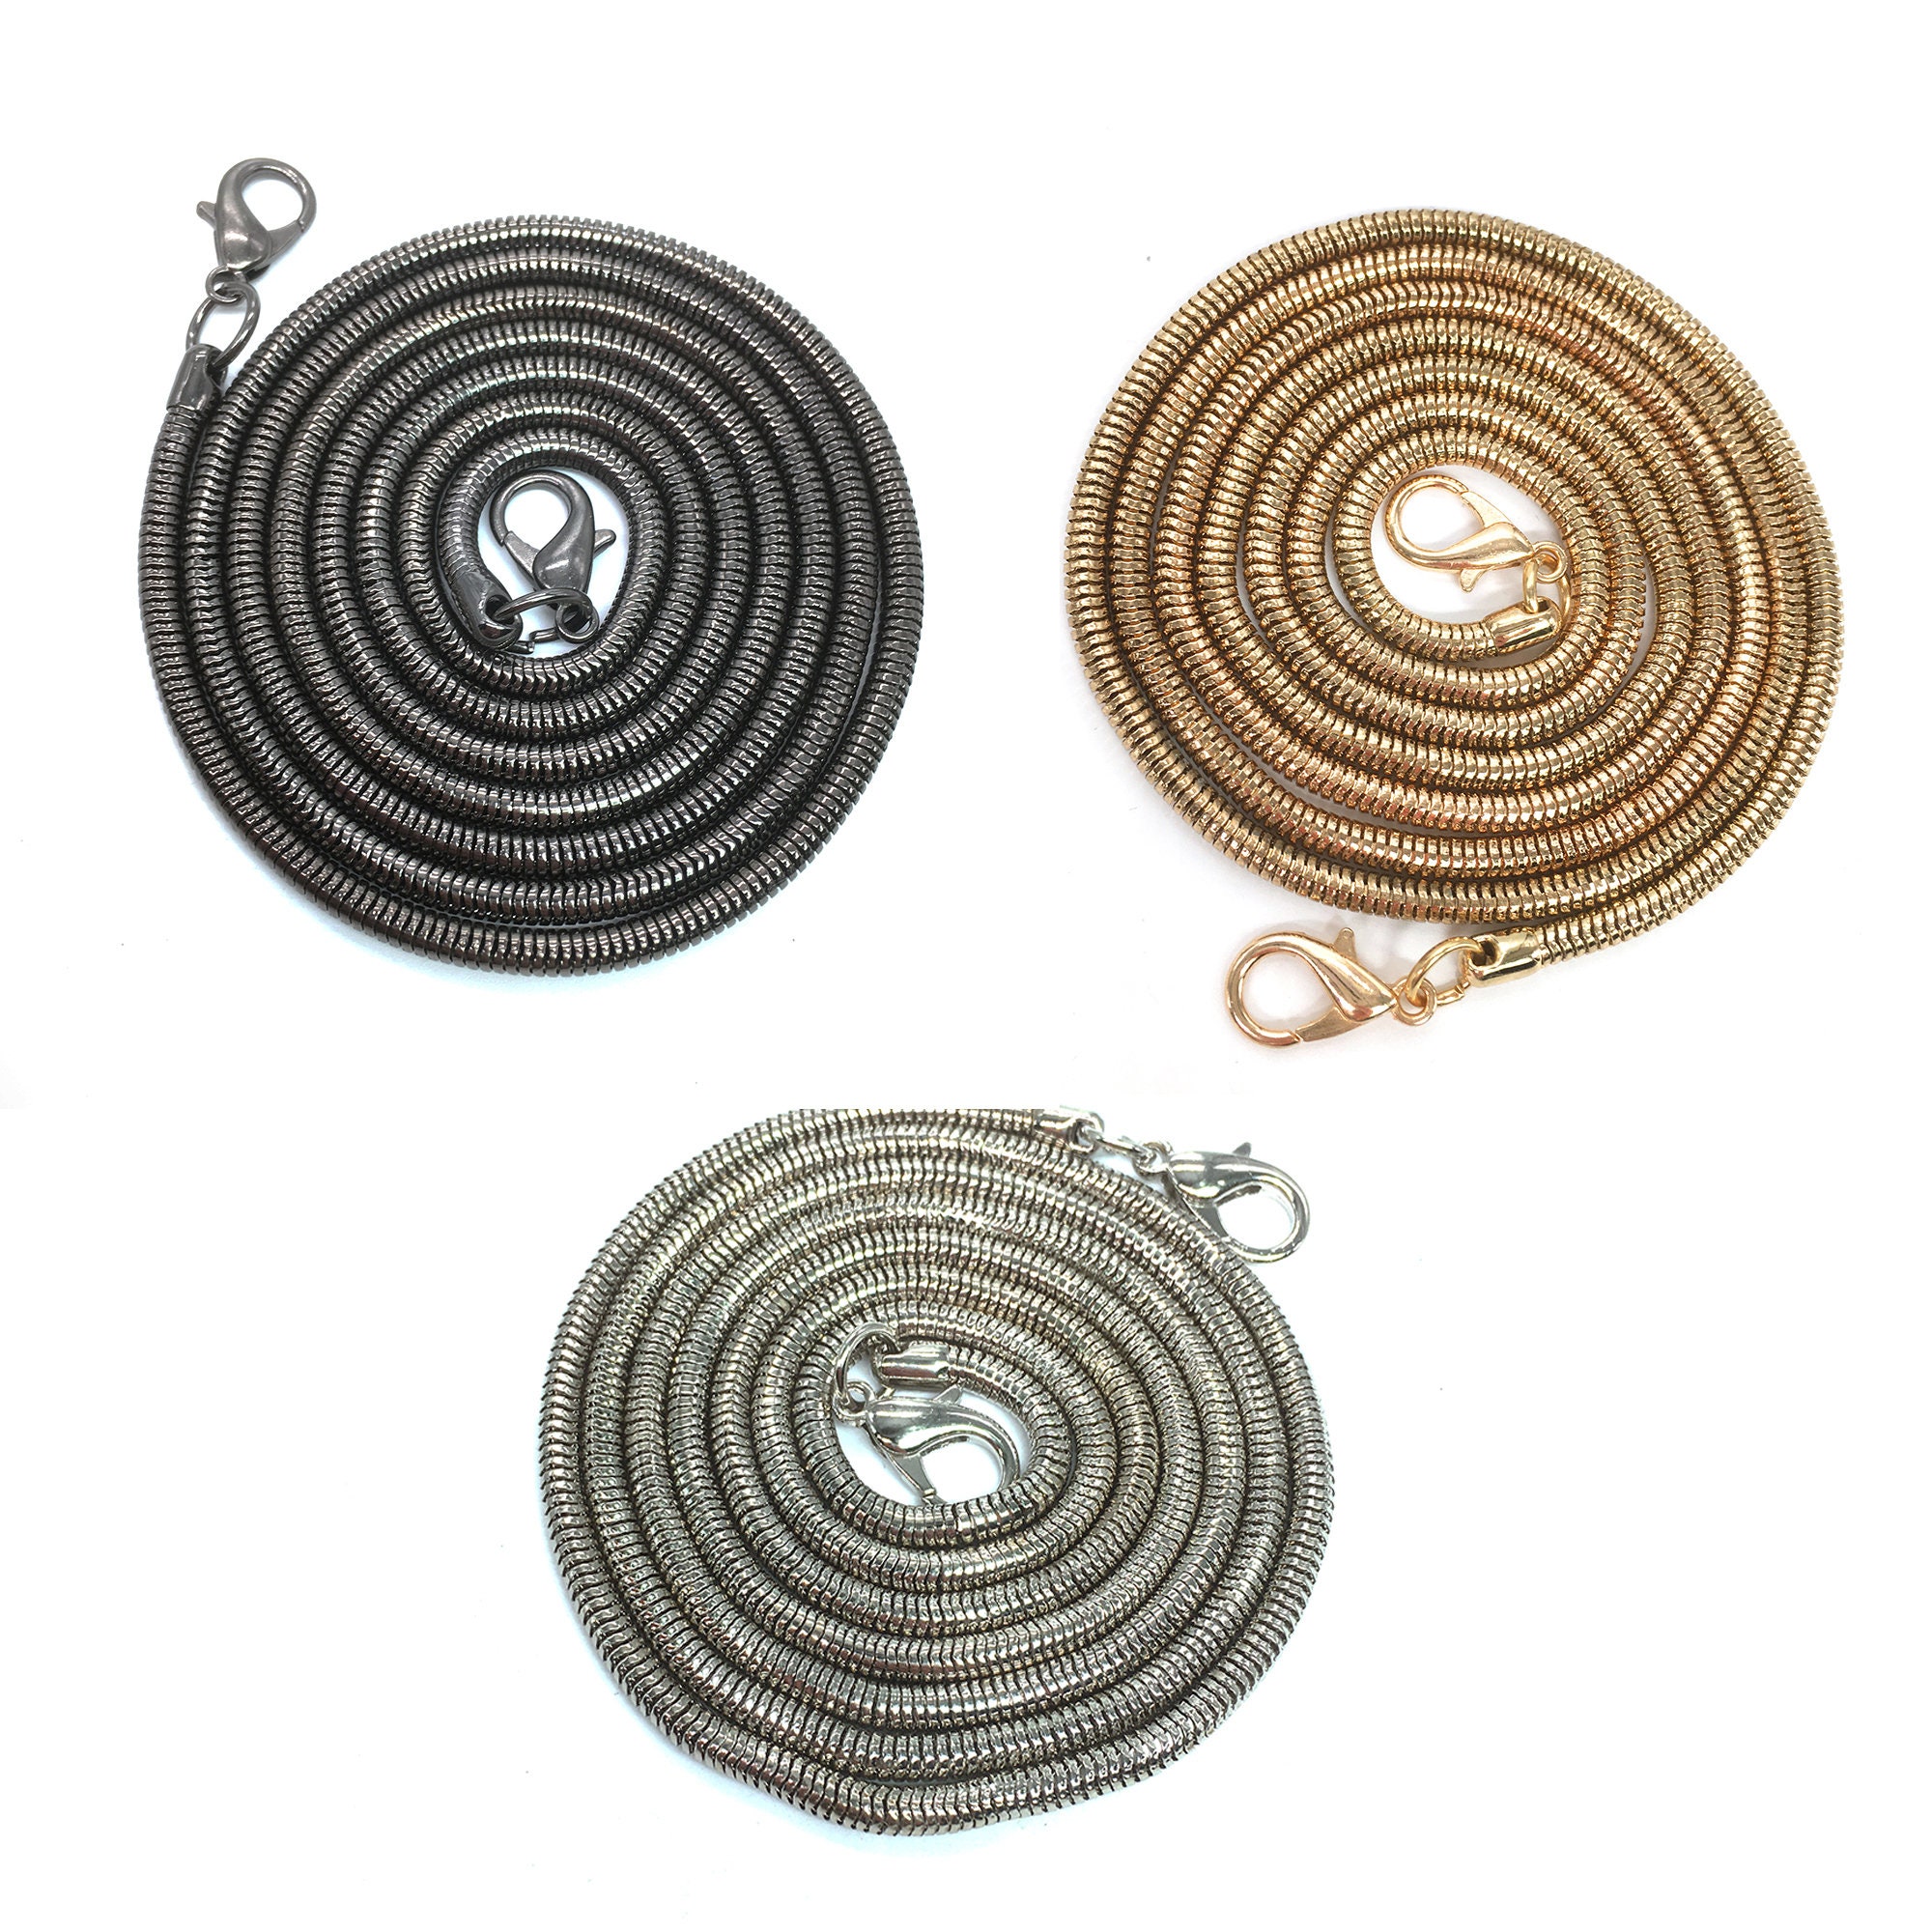 120cm Bag Parts Accessories Chains Silver Belt Hardware Handbag Accessory  Metal Alloy Bag Chain Strap for Women Bags Belt Straps